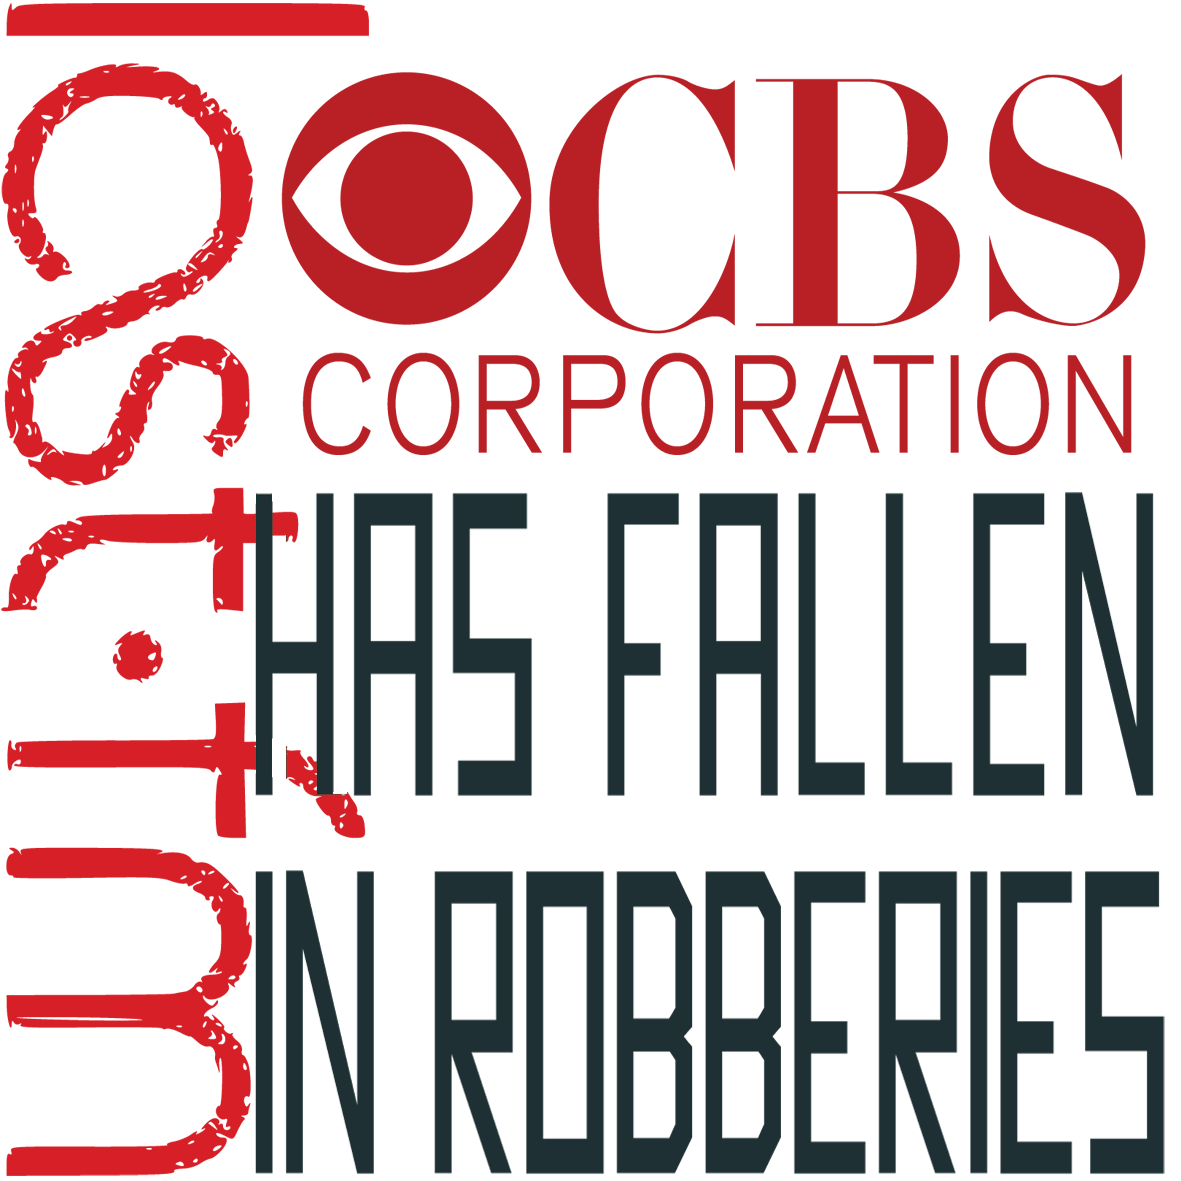 last fm with CBS has fallen in robberies